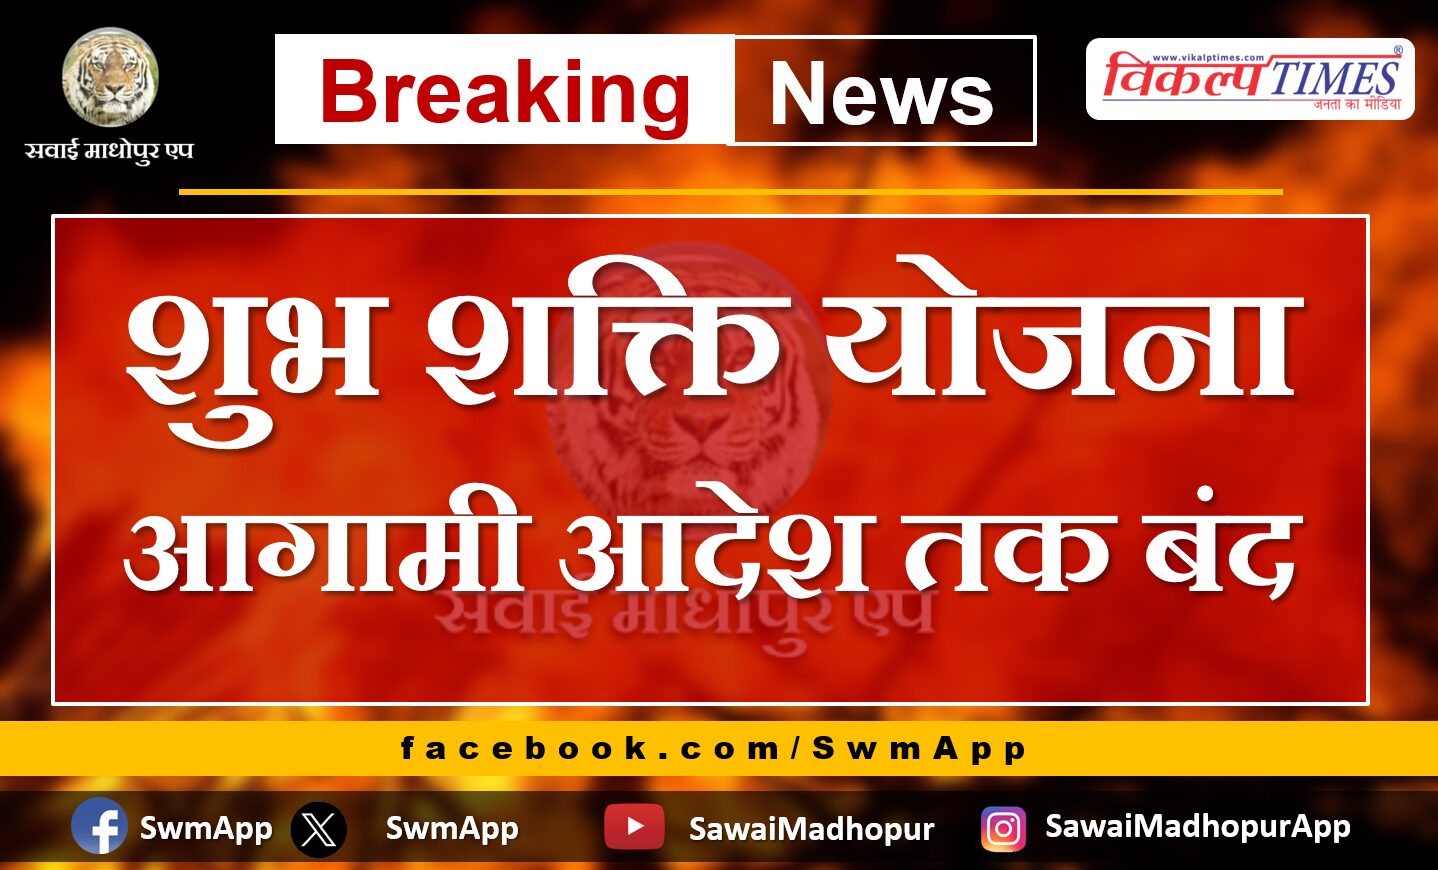 Shubh Shakti Yojana closed till further orders in sawai madhopur